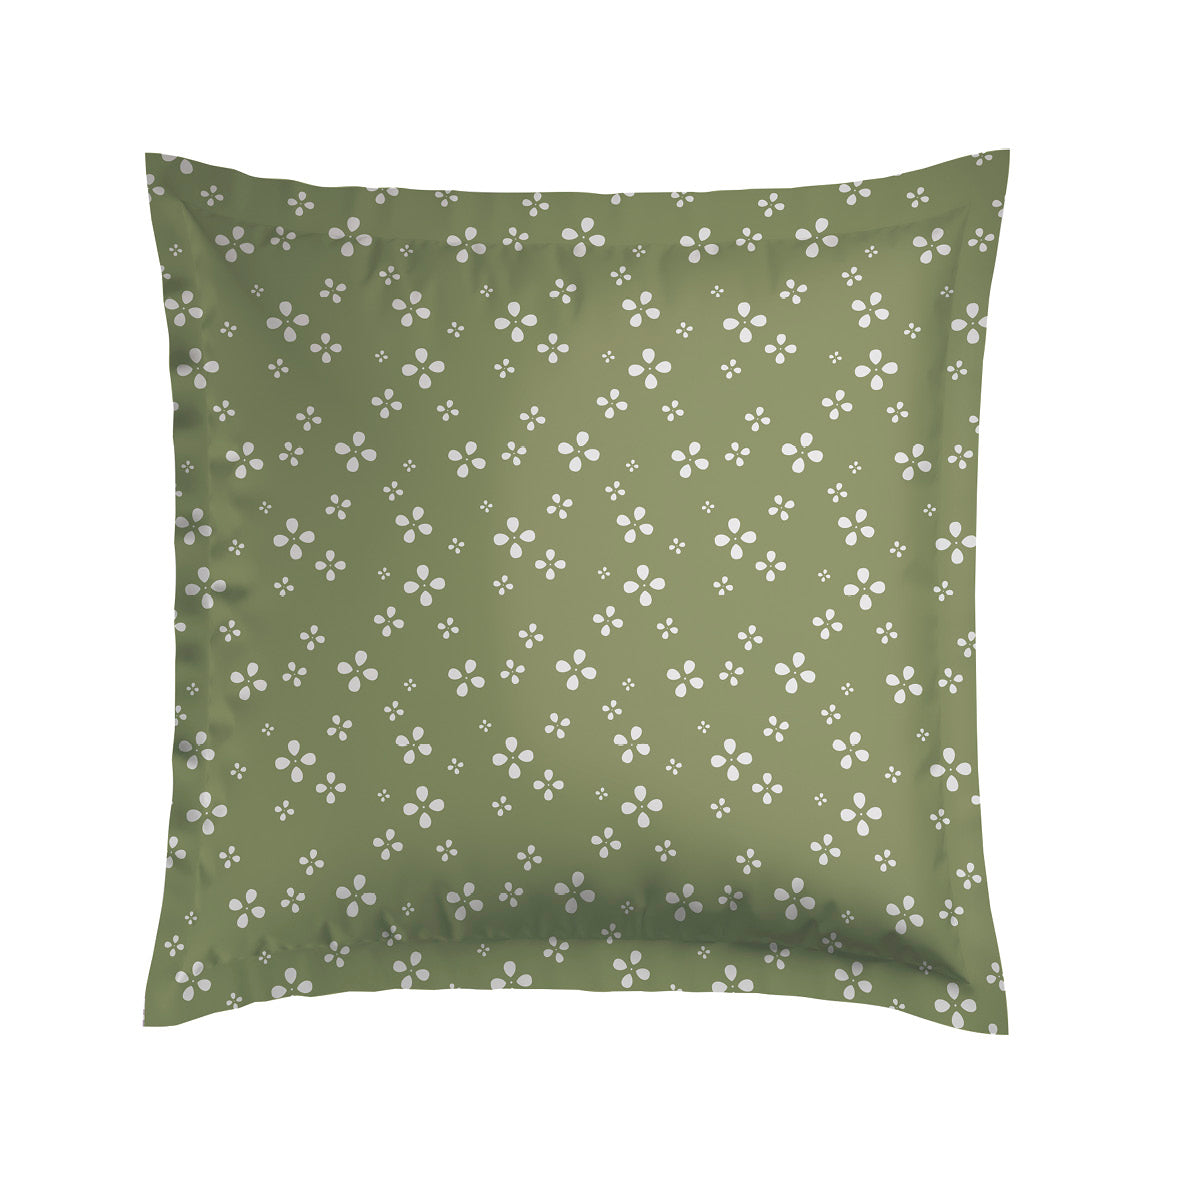 Pillowcase(s) cotton satin - Mirabelle Green 2 x (63 x 63 cm)